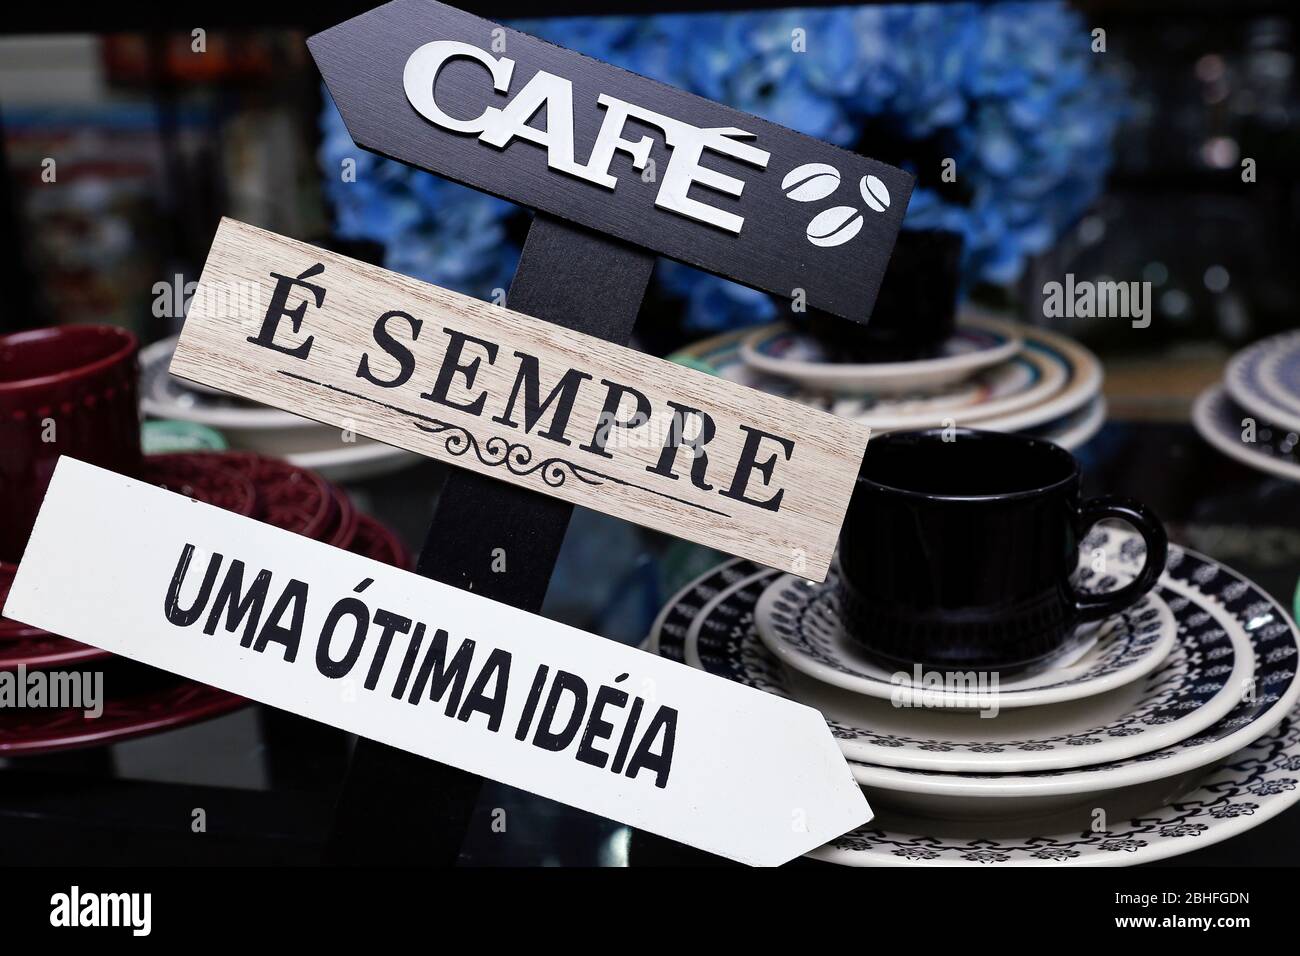 Minas Gerais, MG / Brasil - 24 de abril de 2020: Divertido signo de motivación sobre el café Foto de stock